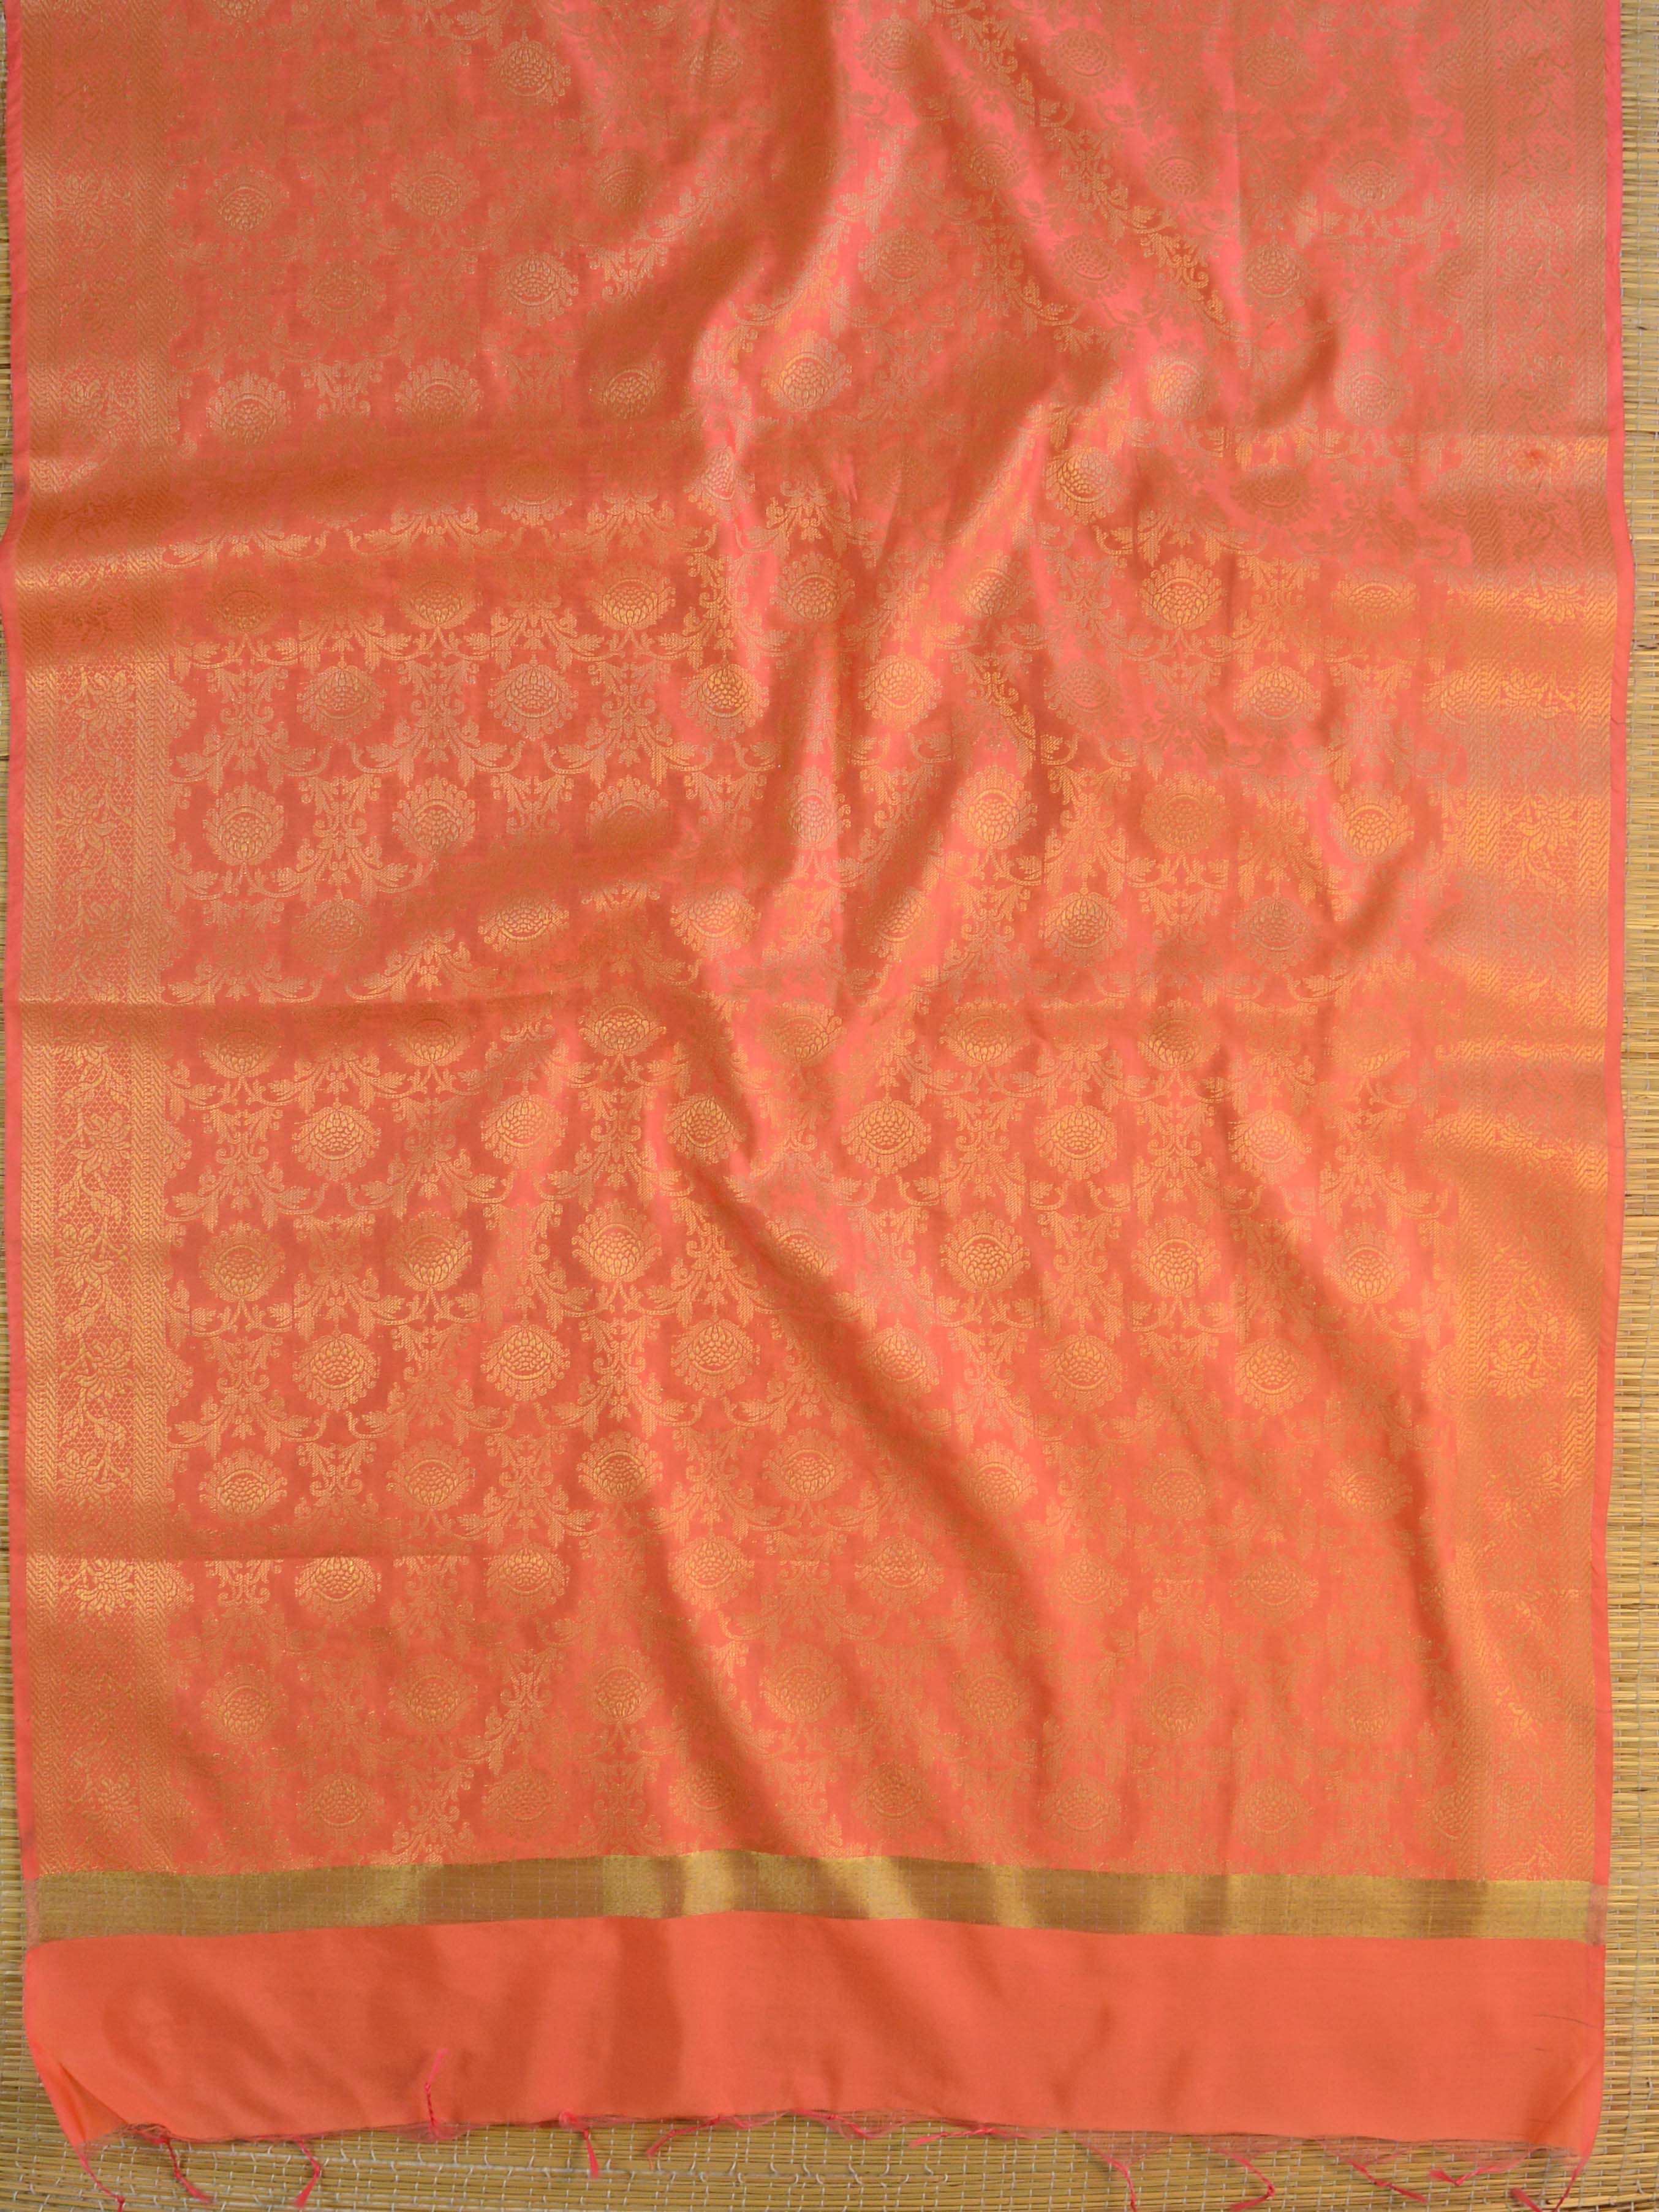 Banarasee Art Silk Jaal Design Dupatta-Peach